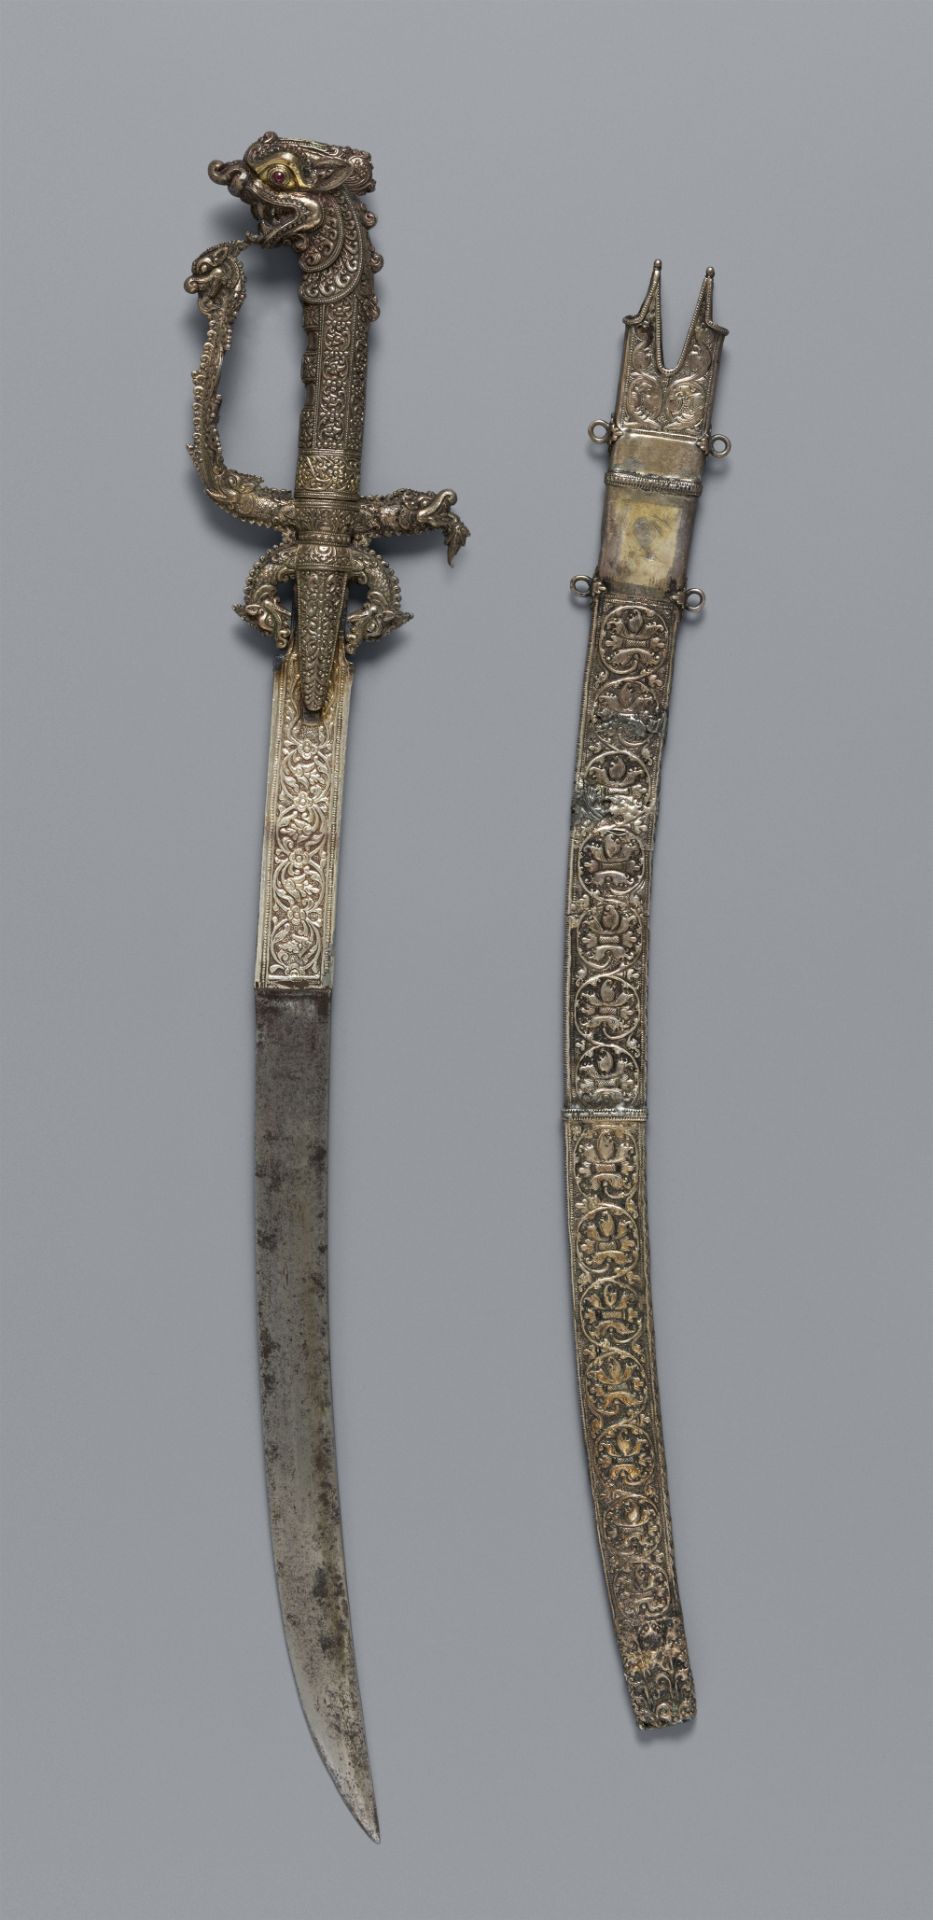 A Kandyan silver sword and scabbard (kasthane). Sri Lanka. Kandy period, 19th century